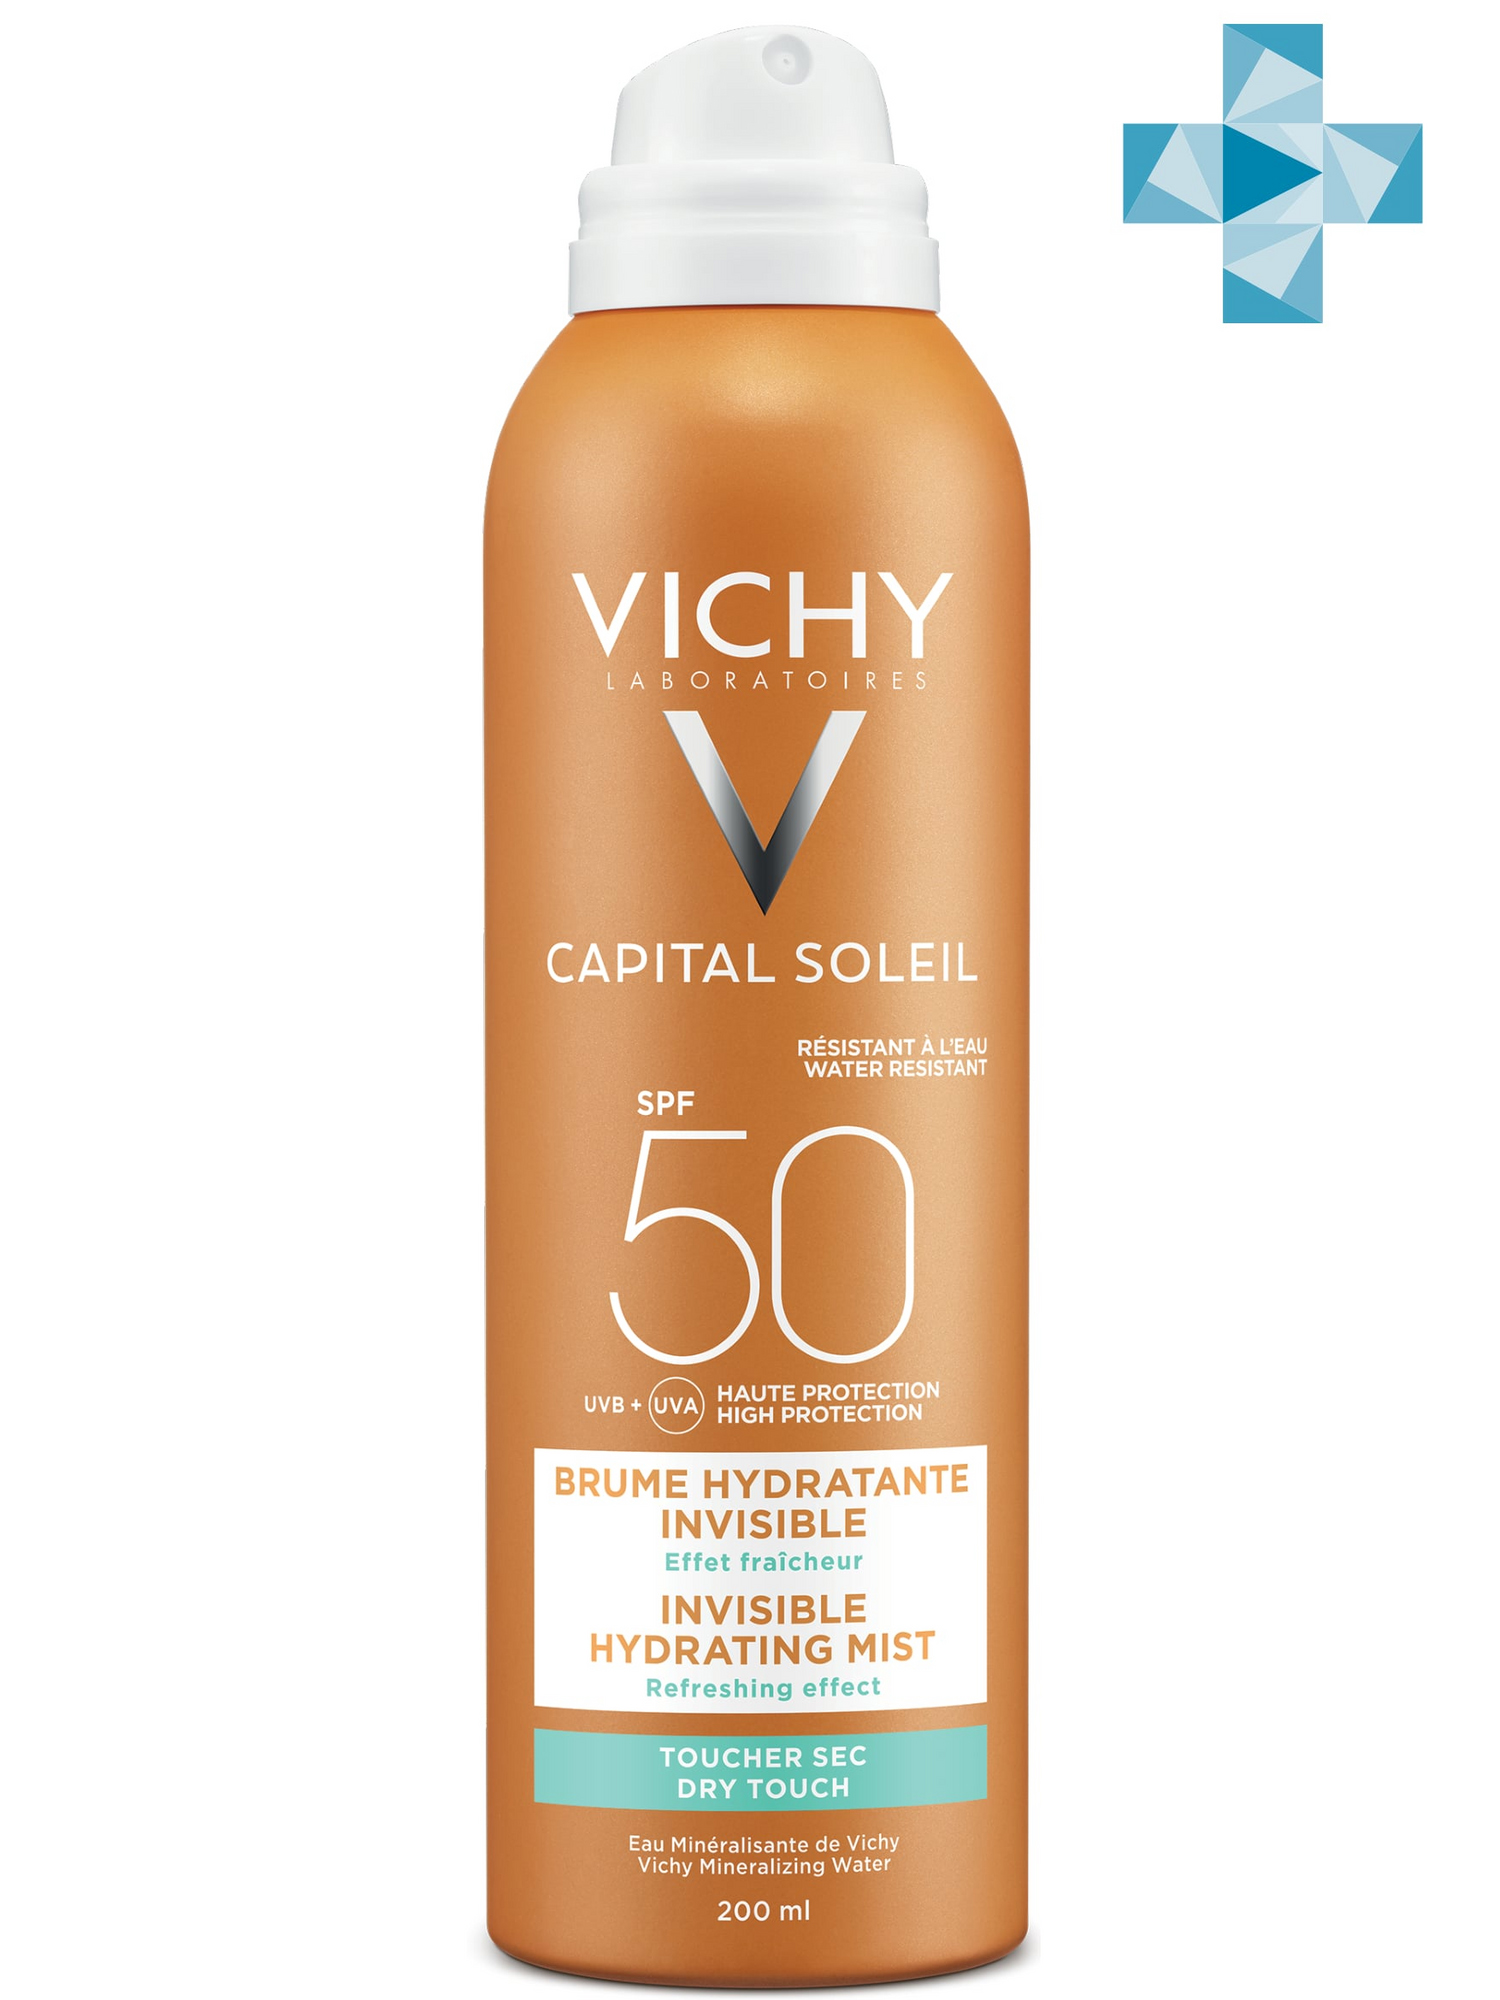 Vichy Солнцезащитный увлажняющий спрей-вуаль SPF 50, 200 мл (Vichy, Capital Ideal Soleil)